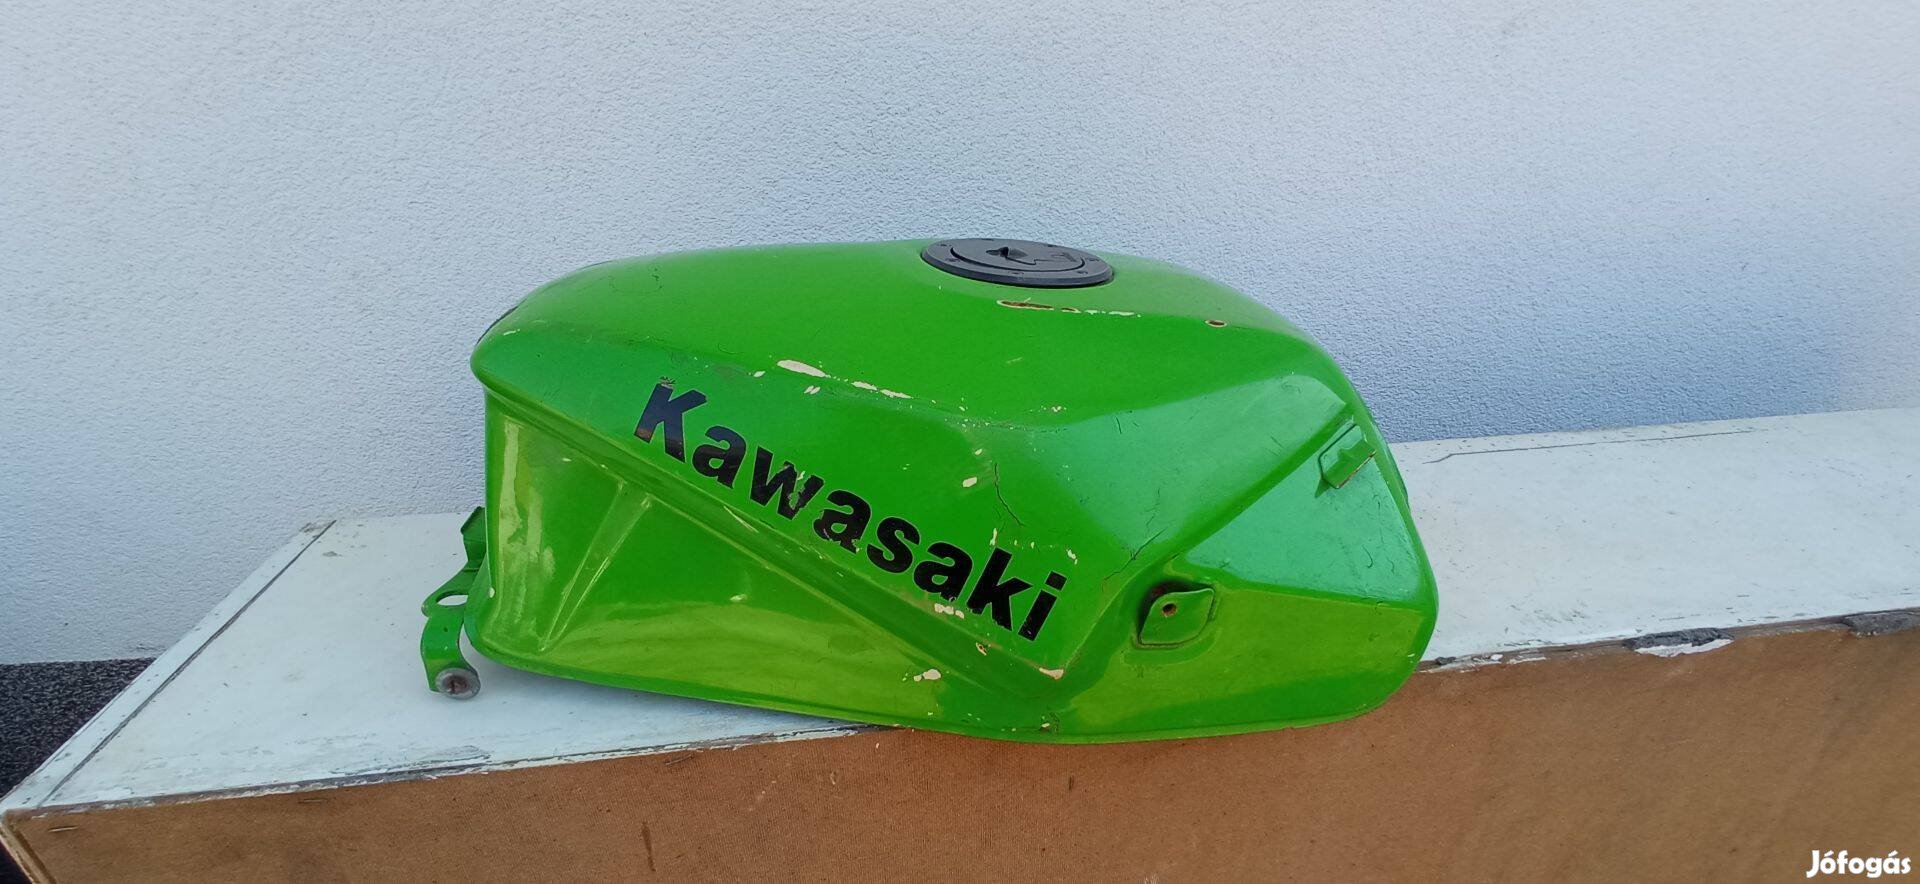 Kawasaki gpx600r üzemanyag tank